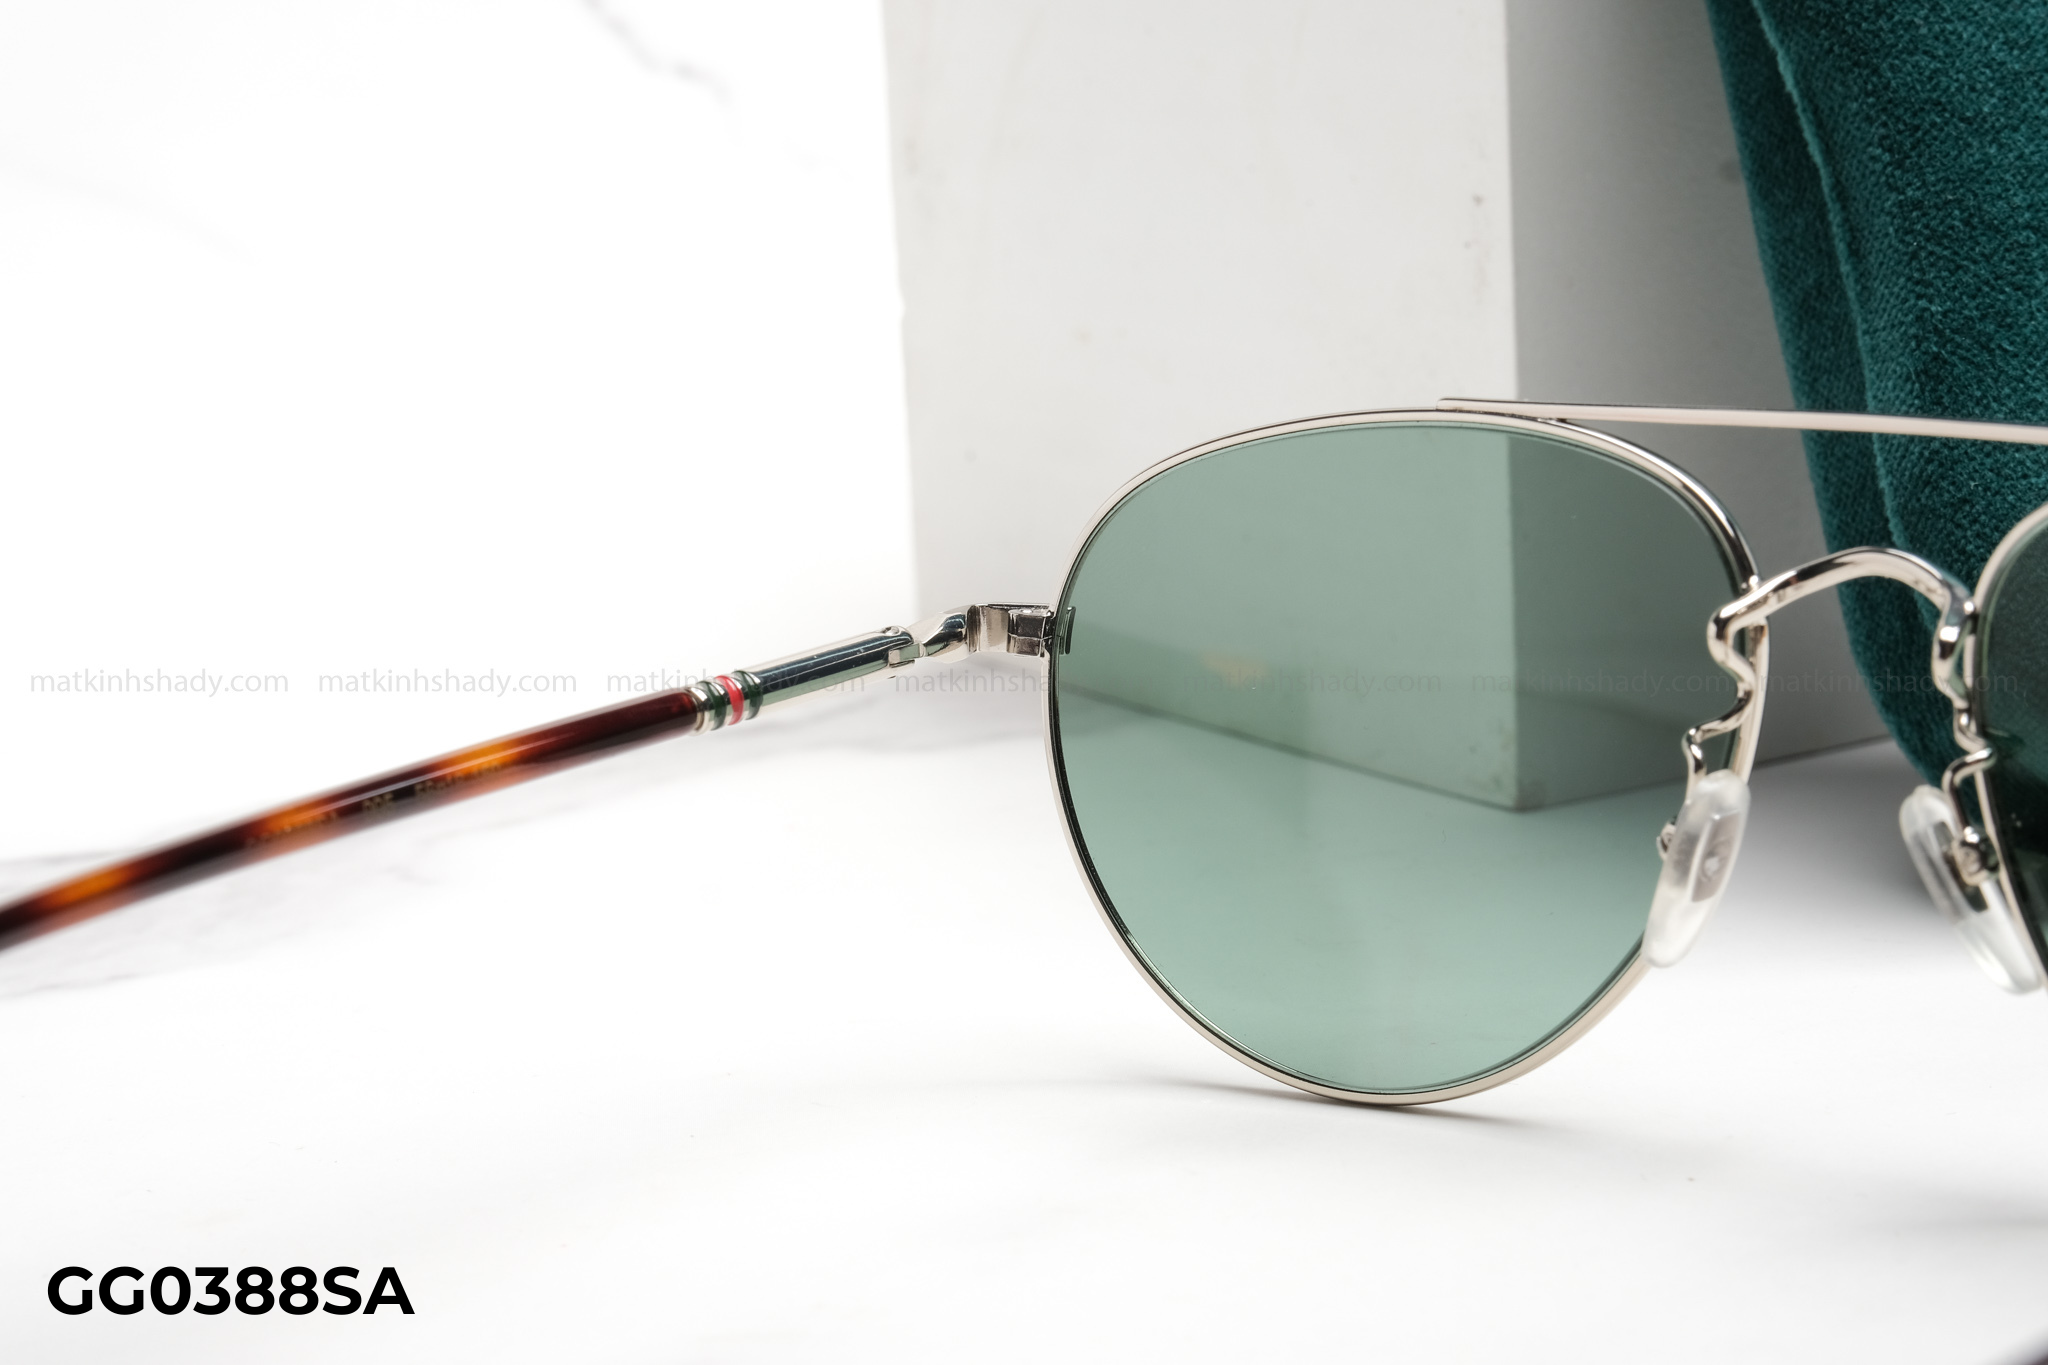  Gucci Eyewear - Sunglasses - GG0388SA 